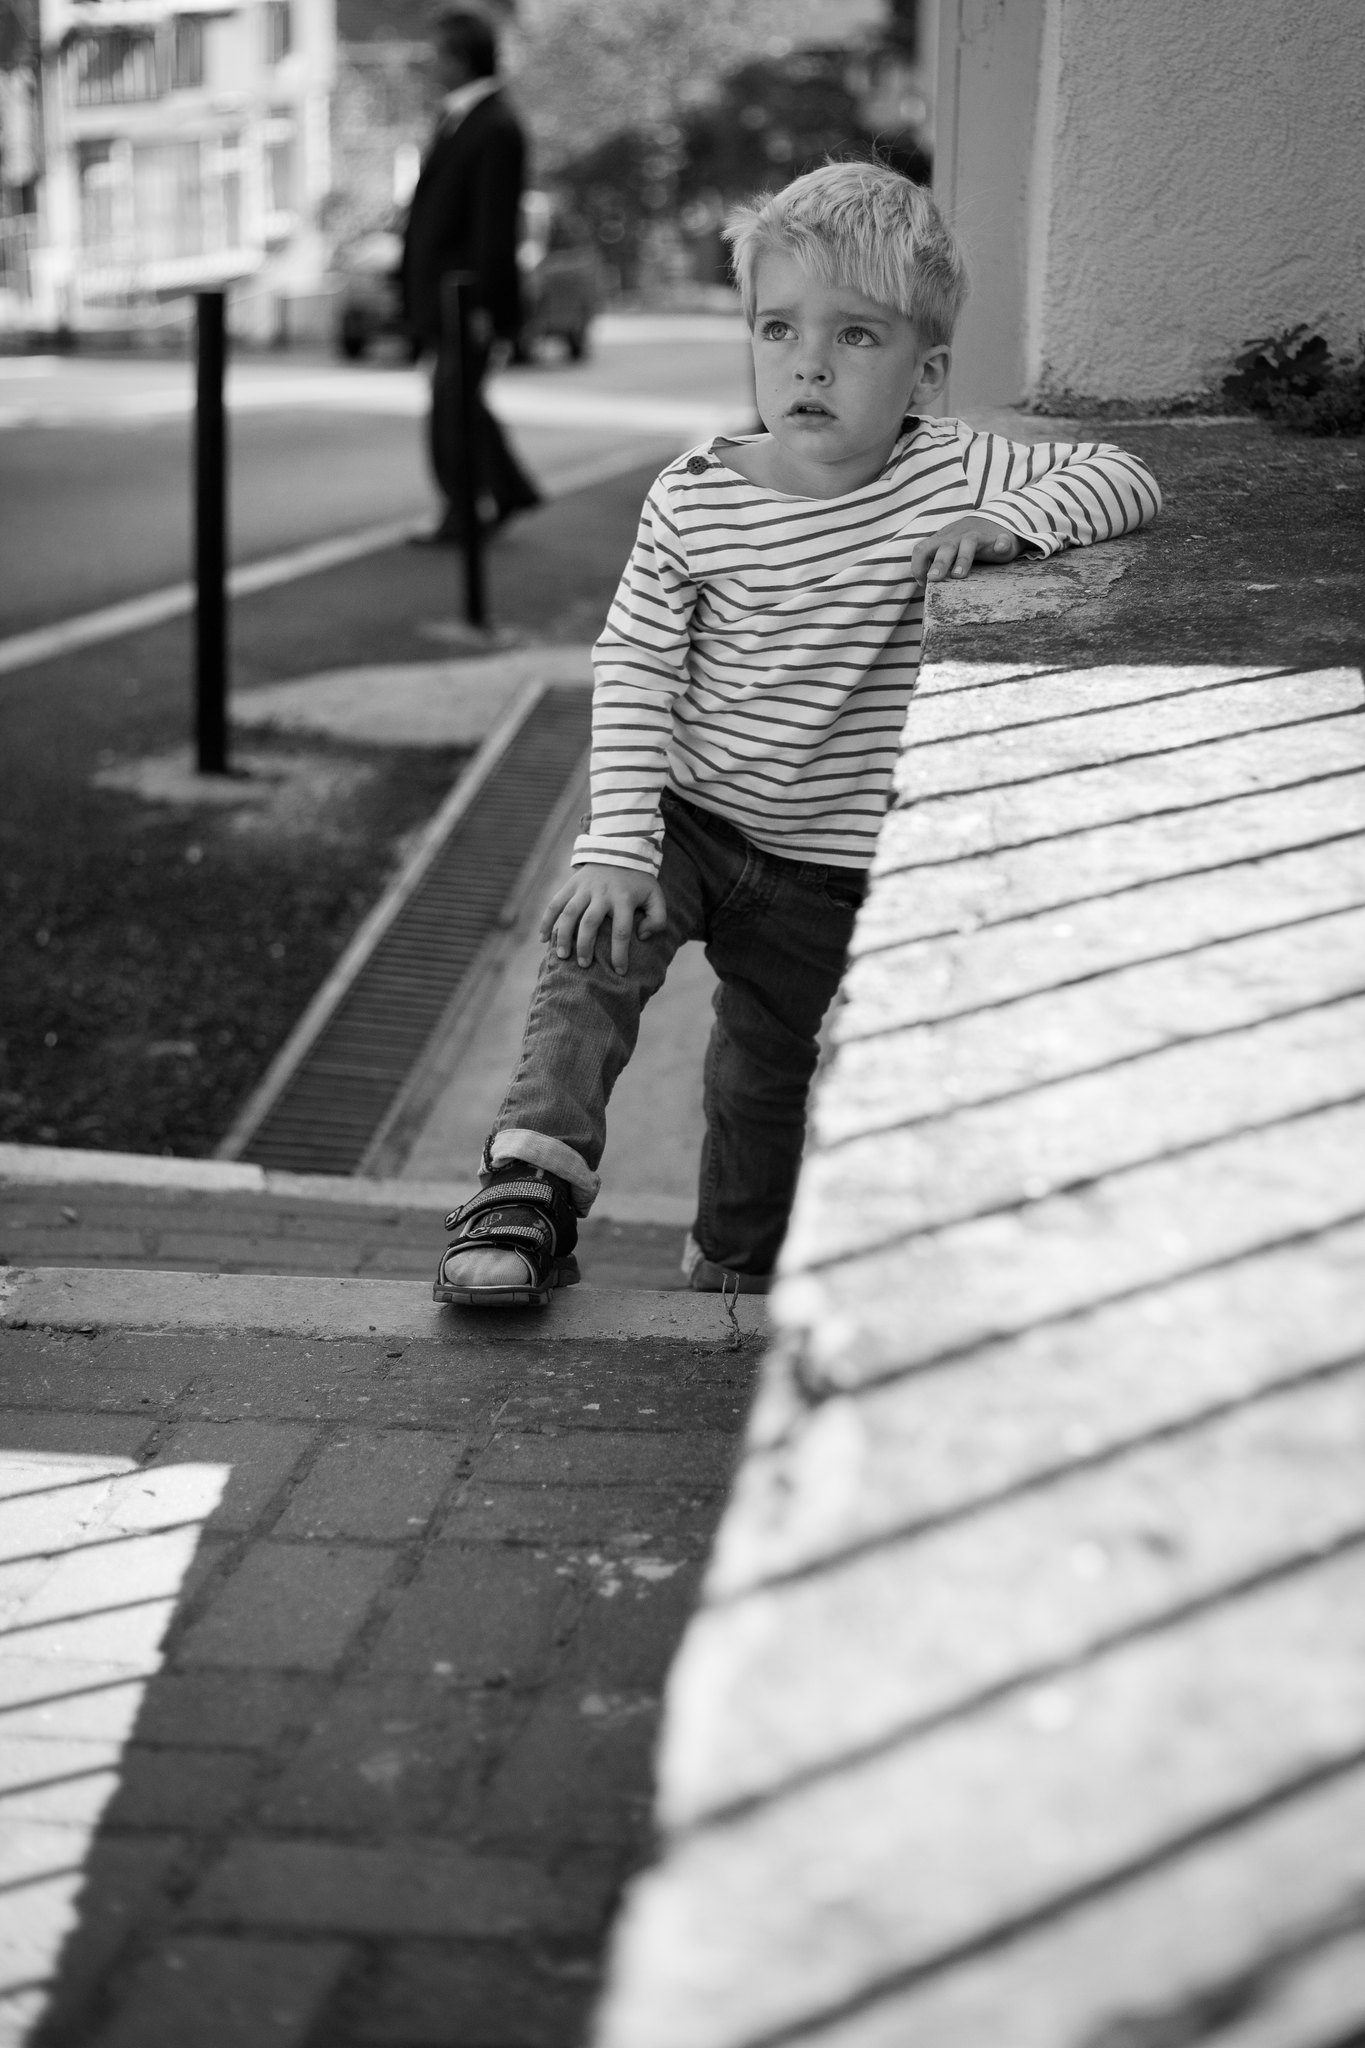 Dragging his feet to kindergarten.